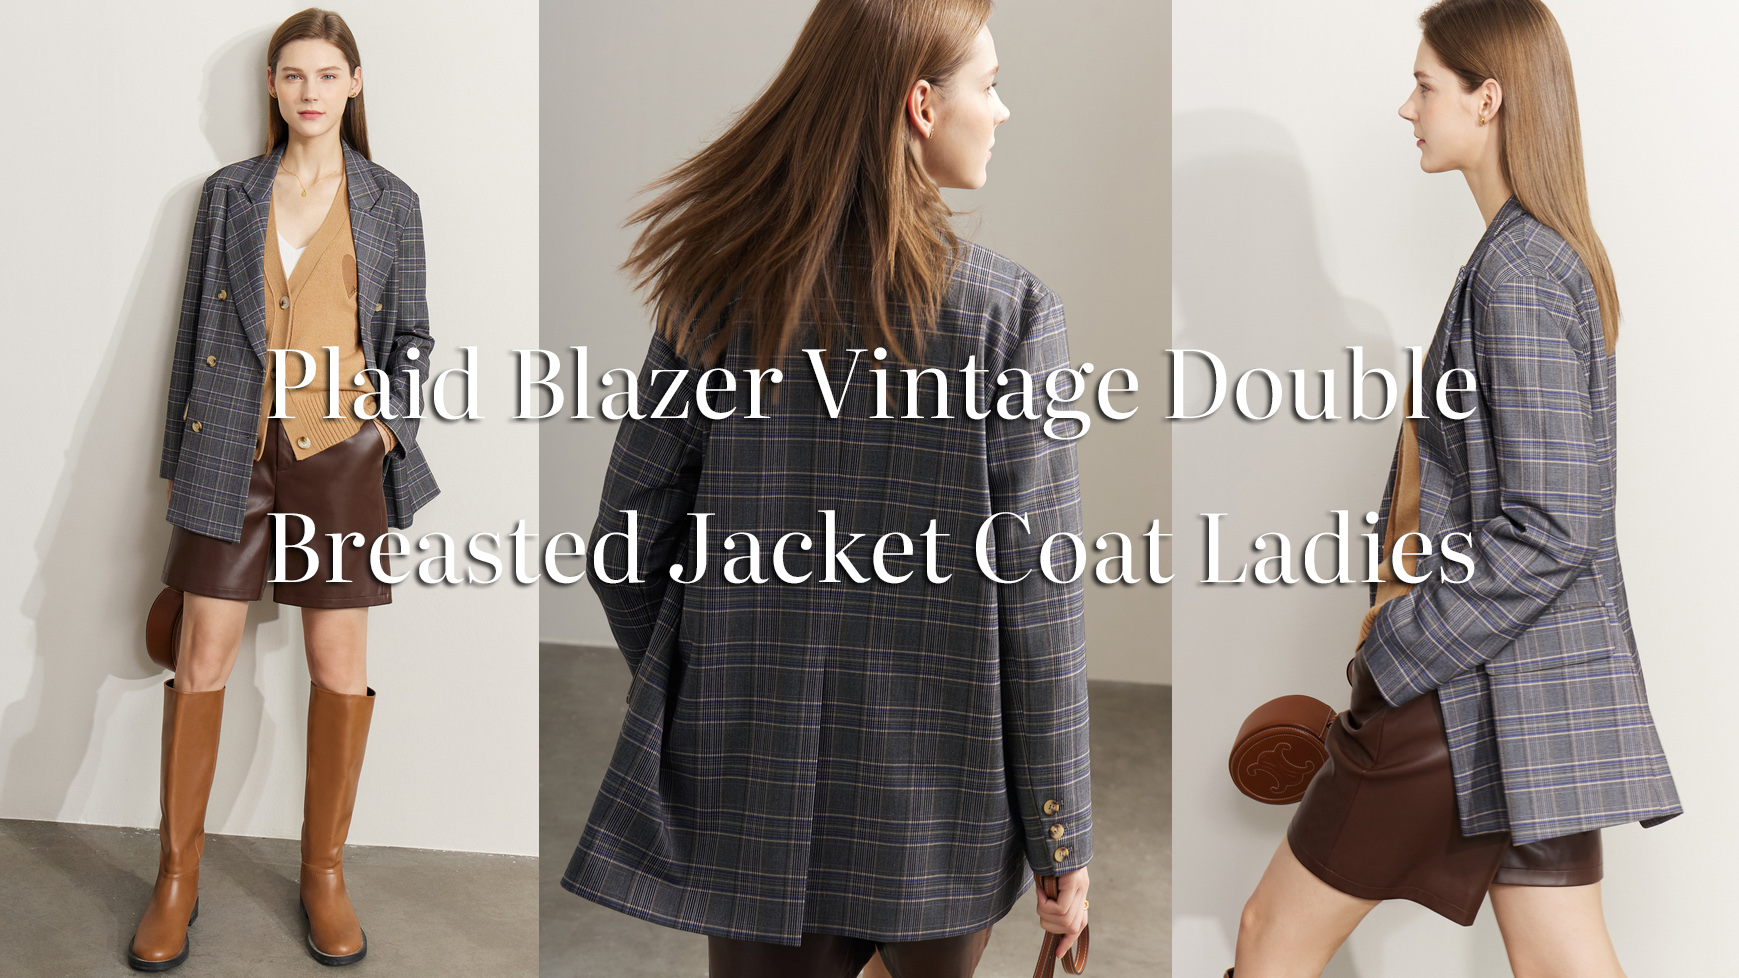 Quality Plaid Blazer Vintage Double Breasted Jacket Coat Ladies Manufacturer |Auschalink